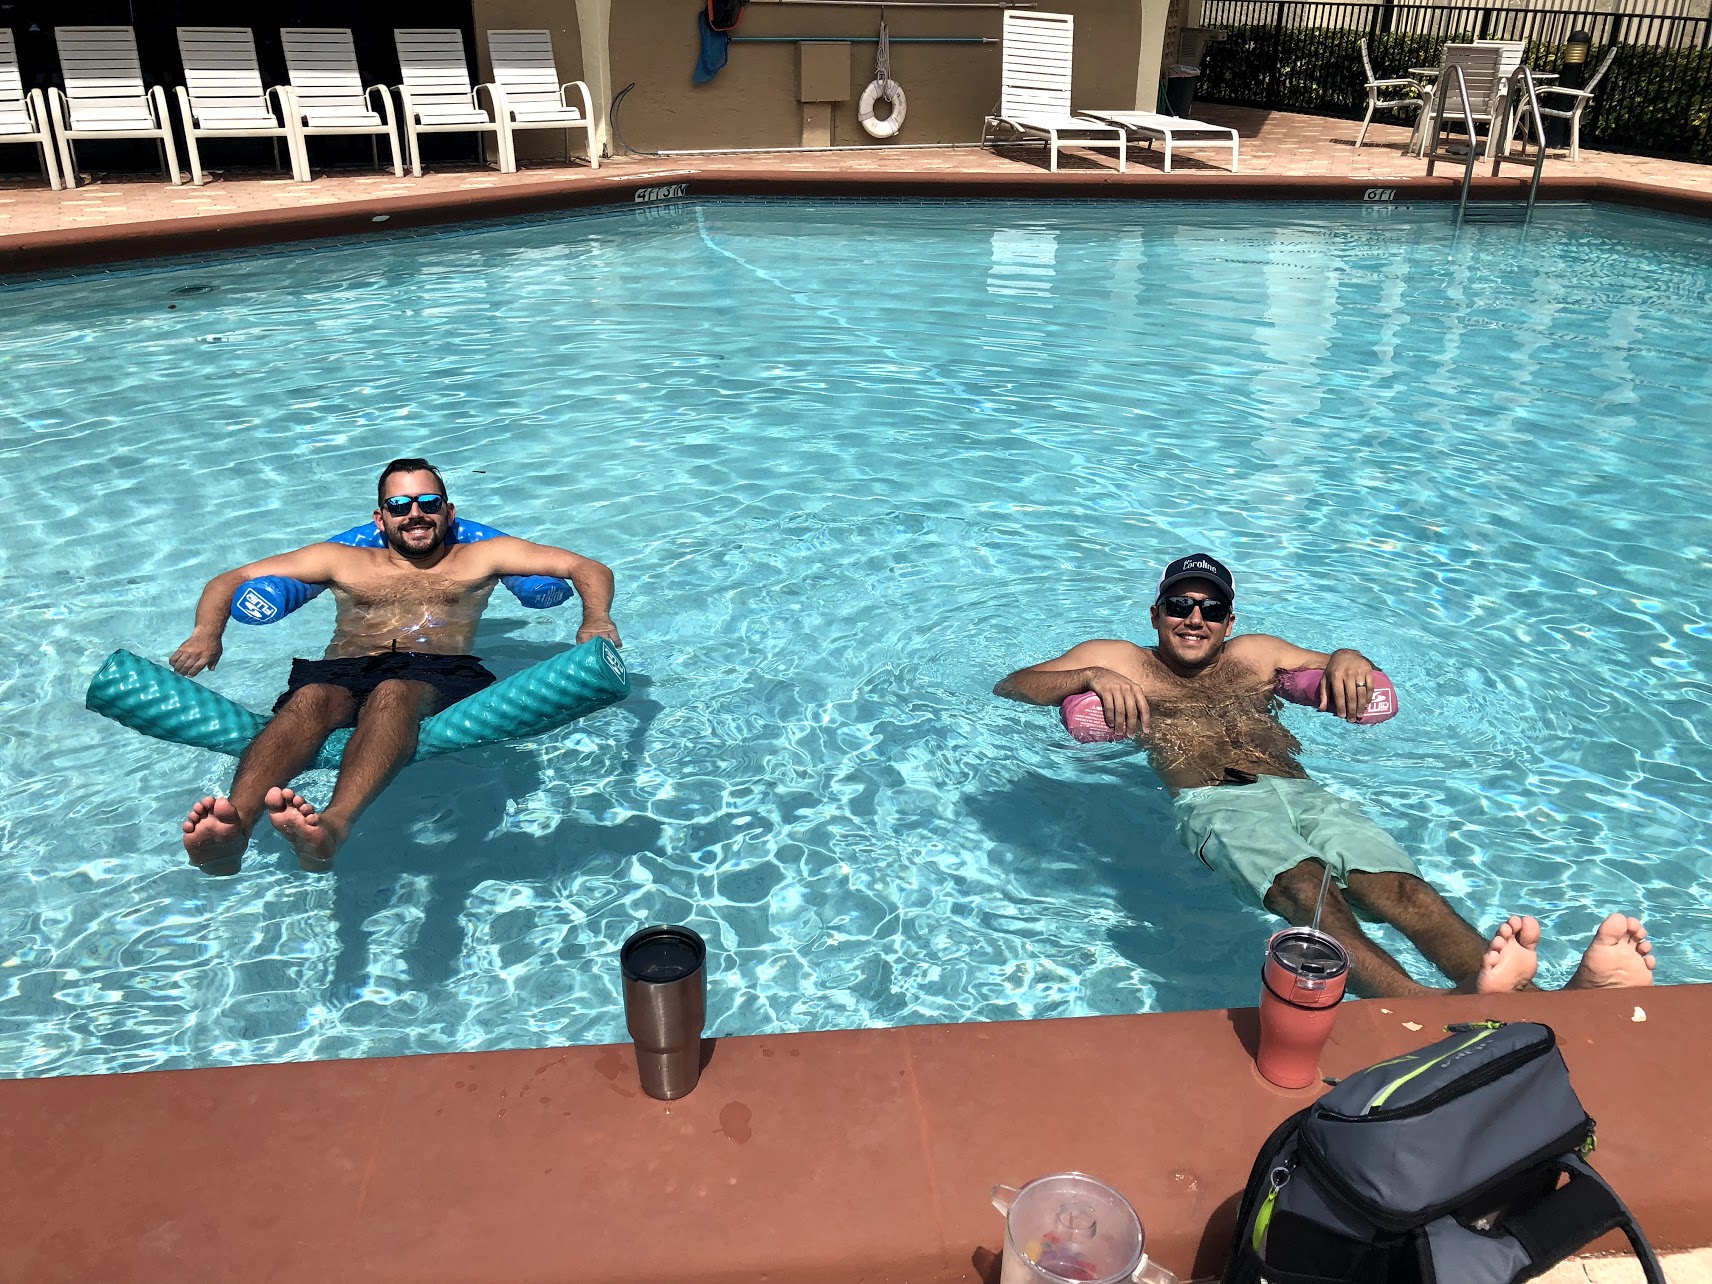 Boca Raton pool day